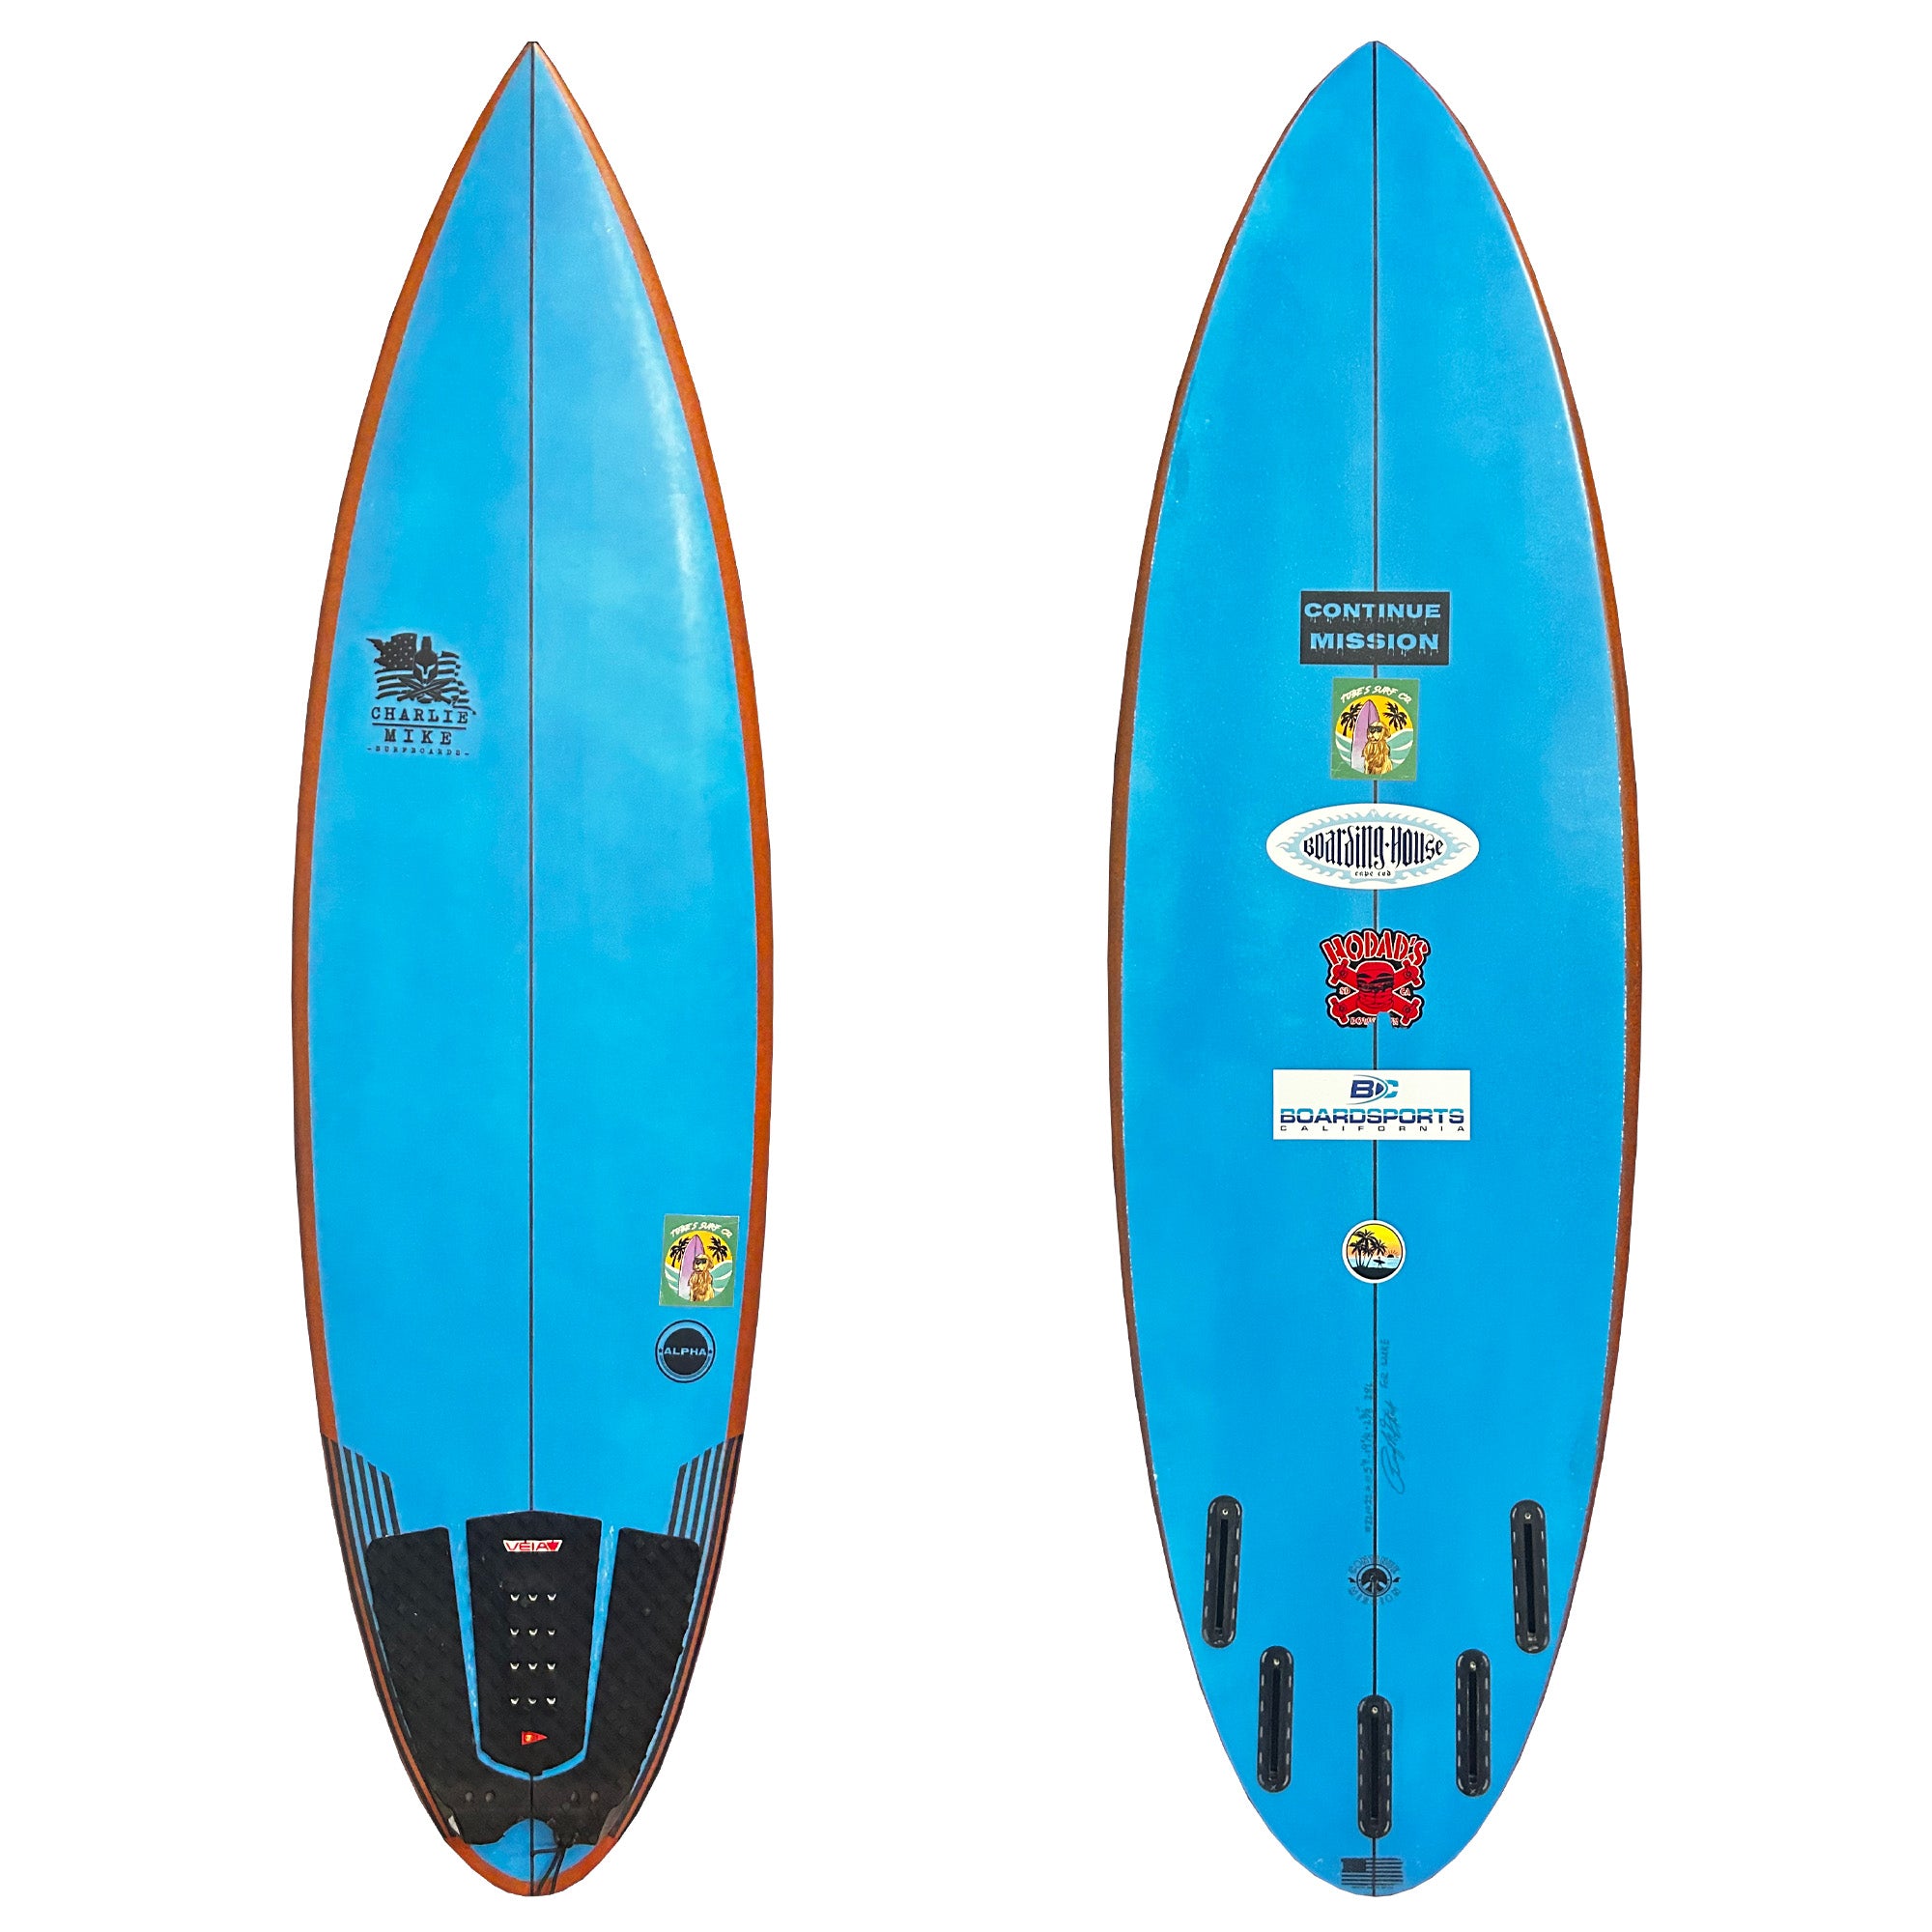 Charlie Mike 5'8 Used Surfboard